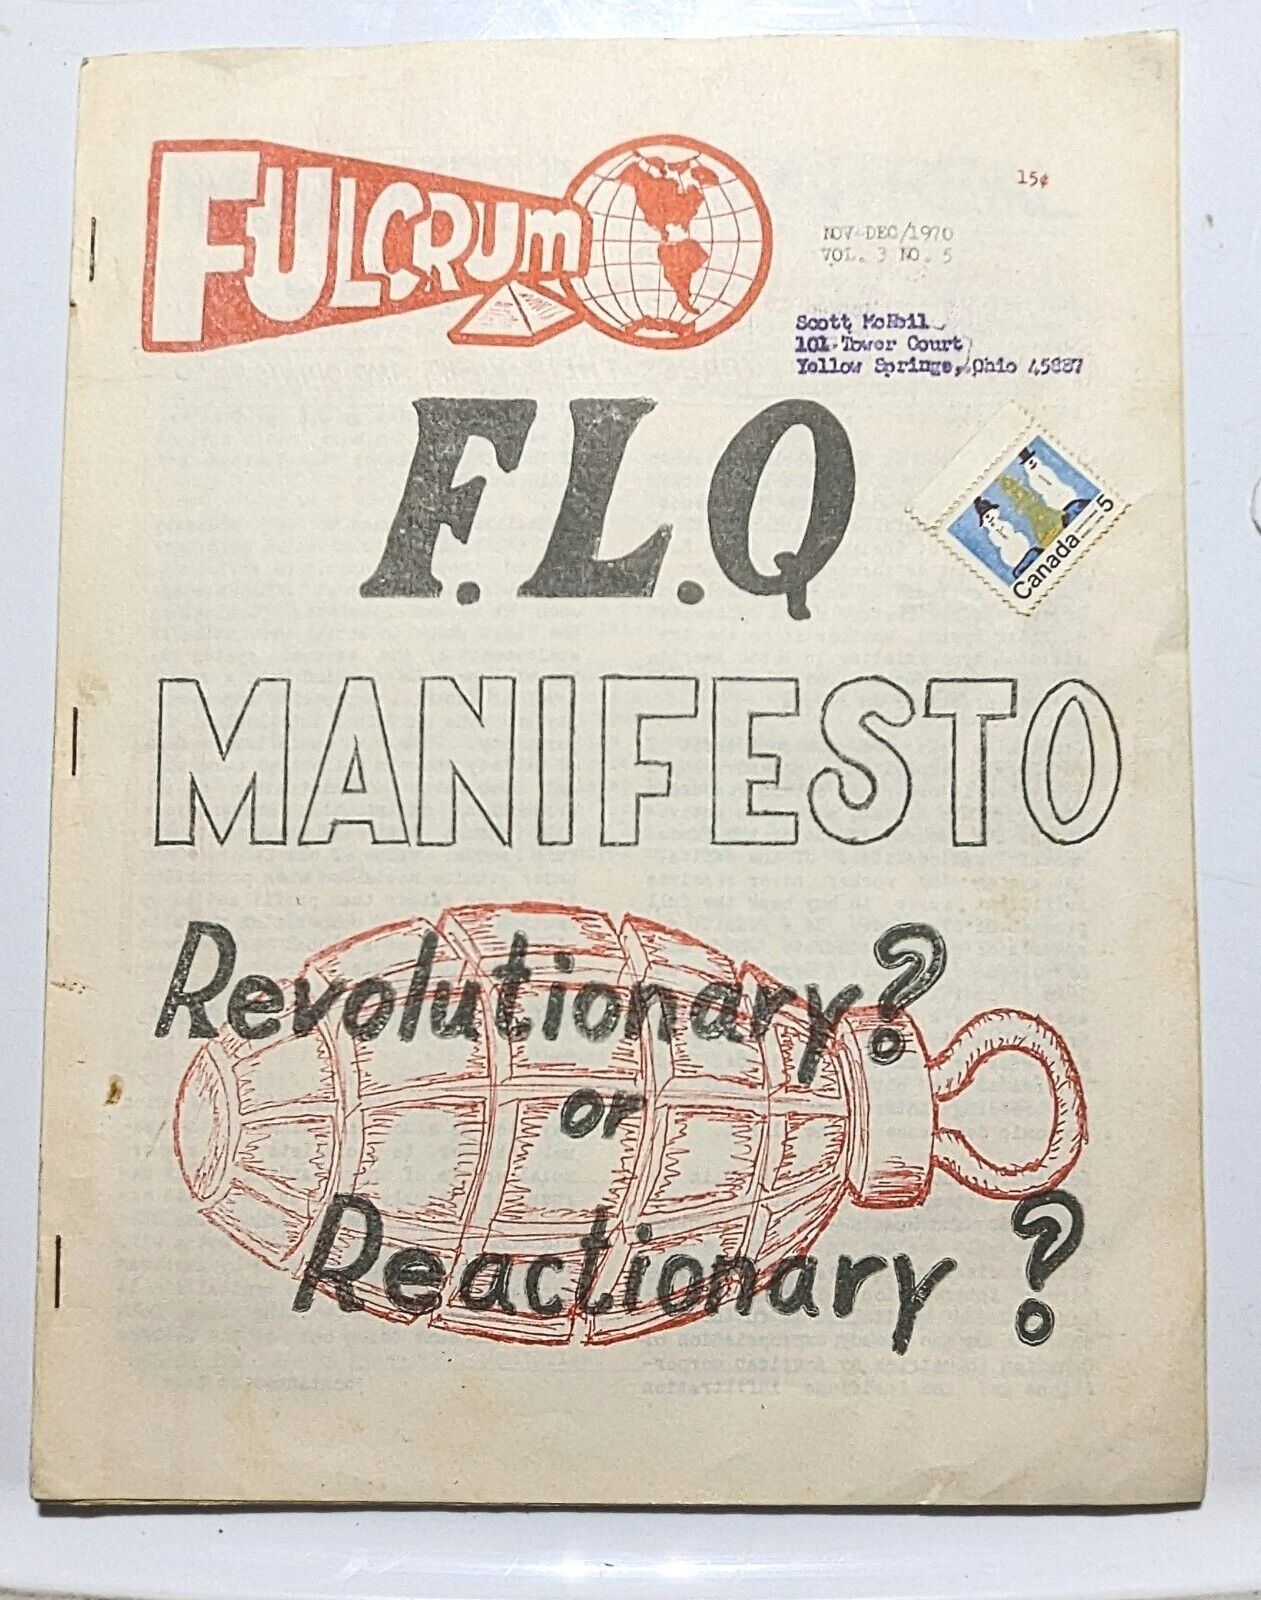 FULCRUM Vol.3 No. 5 Nov-Dec 1970 F.L.Q MANIFESTO Revolutionary? Or Reactionary?